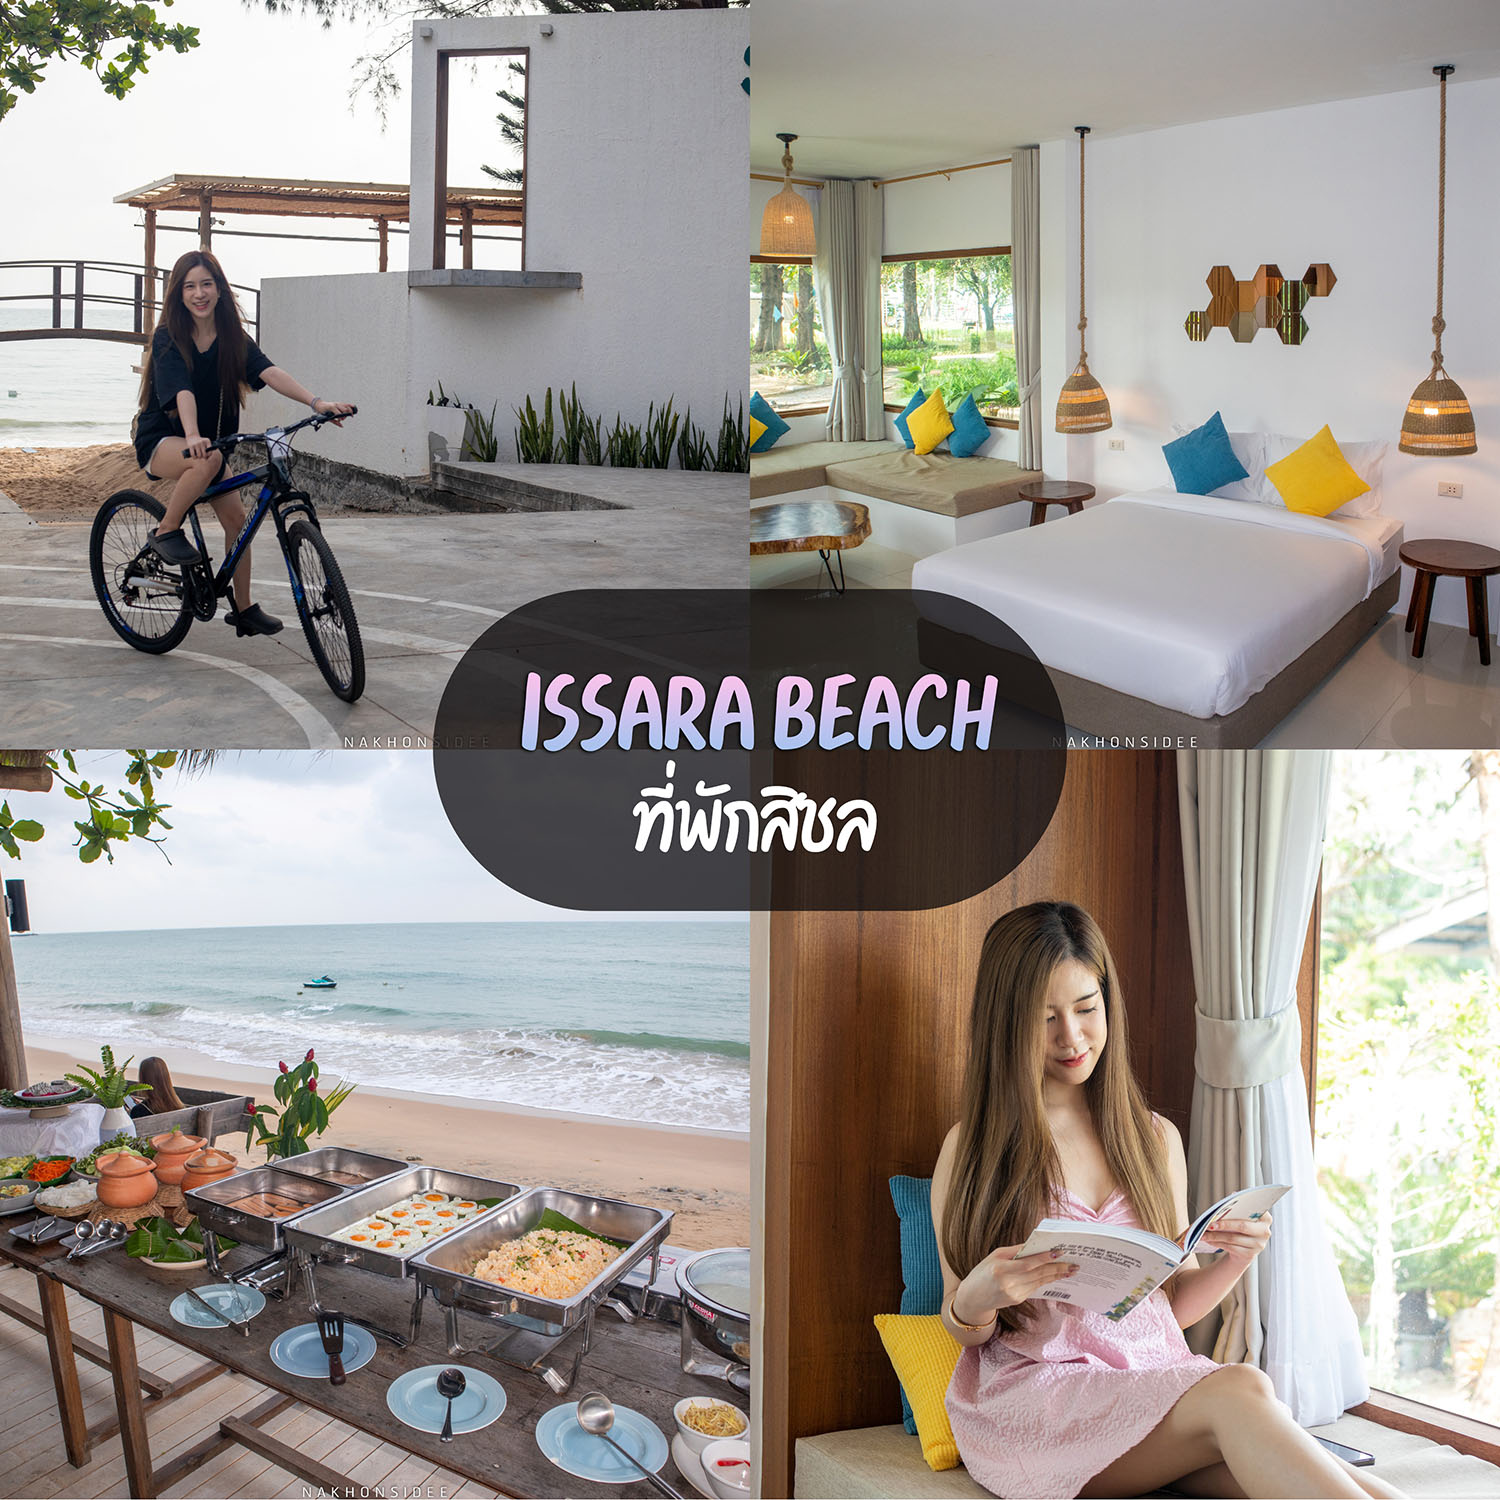 Issara-Beach-Resort-ที่พักสิชล ที่พักสุดสวยริมทะเล-หาดสิชล-ที่นี่บอกเลยมีครบทั้งร้านอาหาร-Cafe-ที่พักโรงแรมรีสอร์ท-มาที่เดียวครบเลยน้าา-กิจกรรมทางน้ำก็มีด้วย-พายเรือคายัค-เจ็ตสกีปังๆ-ห้องพักมีหลากหลายแบบหลายสไตล์ให้เลือกกันเลยทีเดียว-ไฮไลท์ทีเด็ดคือที่นี่มีต้นไม้เยอะมวากก-ร่มรื่นทั้งวันไม่ร้อนเลยแหละ-ต้องมาน้าา ที่พัก,ใกล้วัดเจดีย์,ตาไข่,ตาพรานบุญ,นครศรีธรรมราช,สิชล,ขนอม